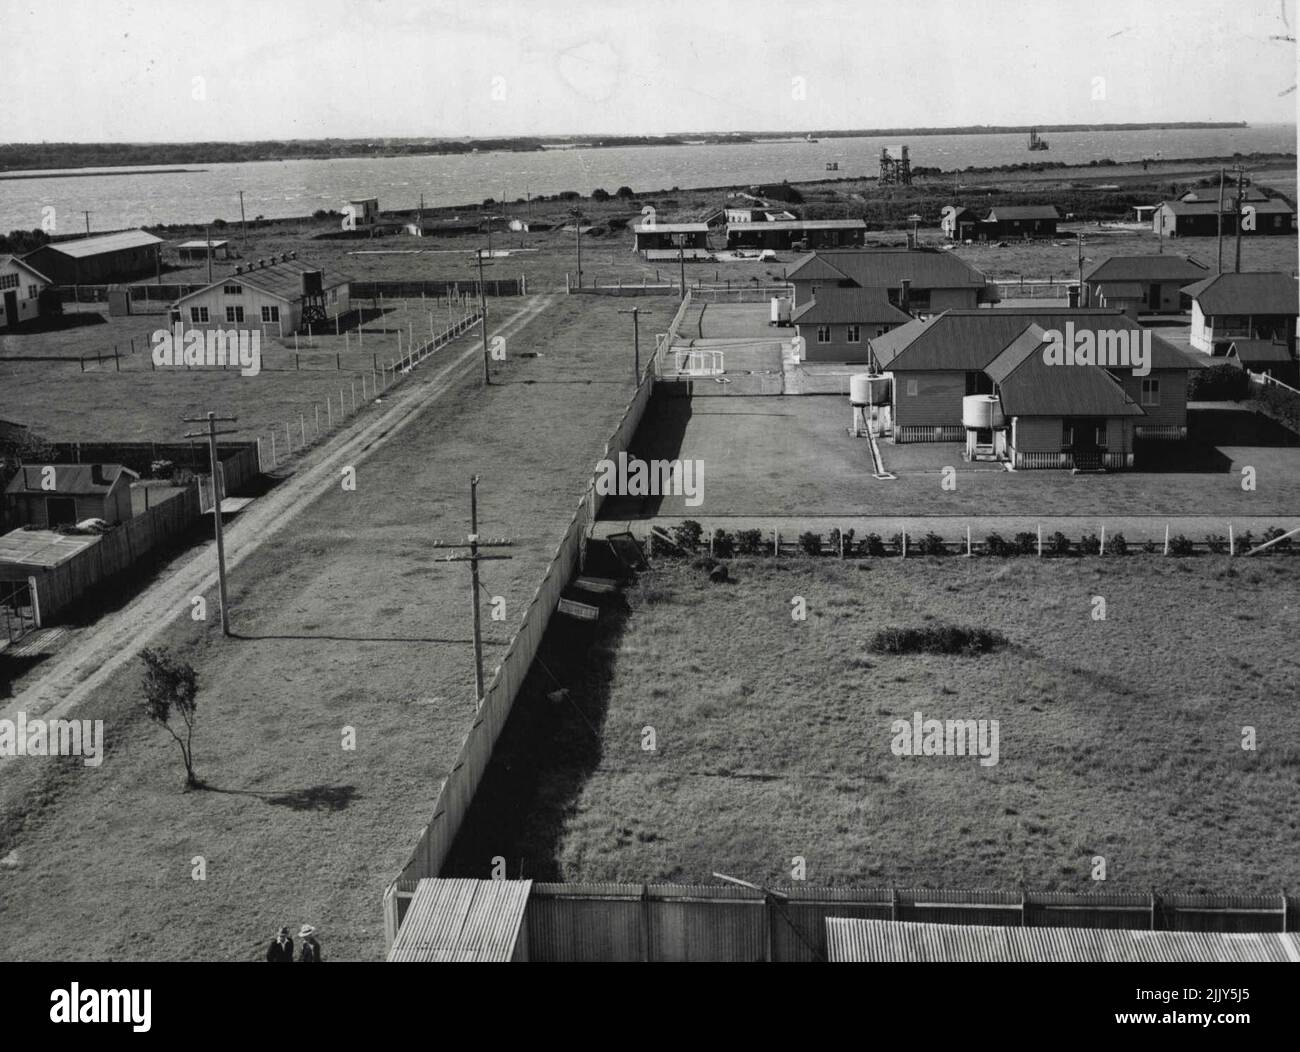 Quarantine Station - Brisbane And Suburbs. November 06, 1947. Stock Photo